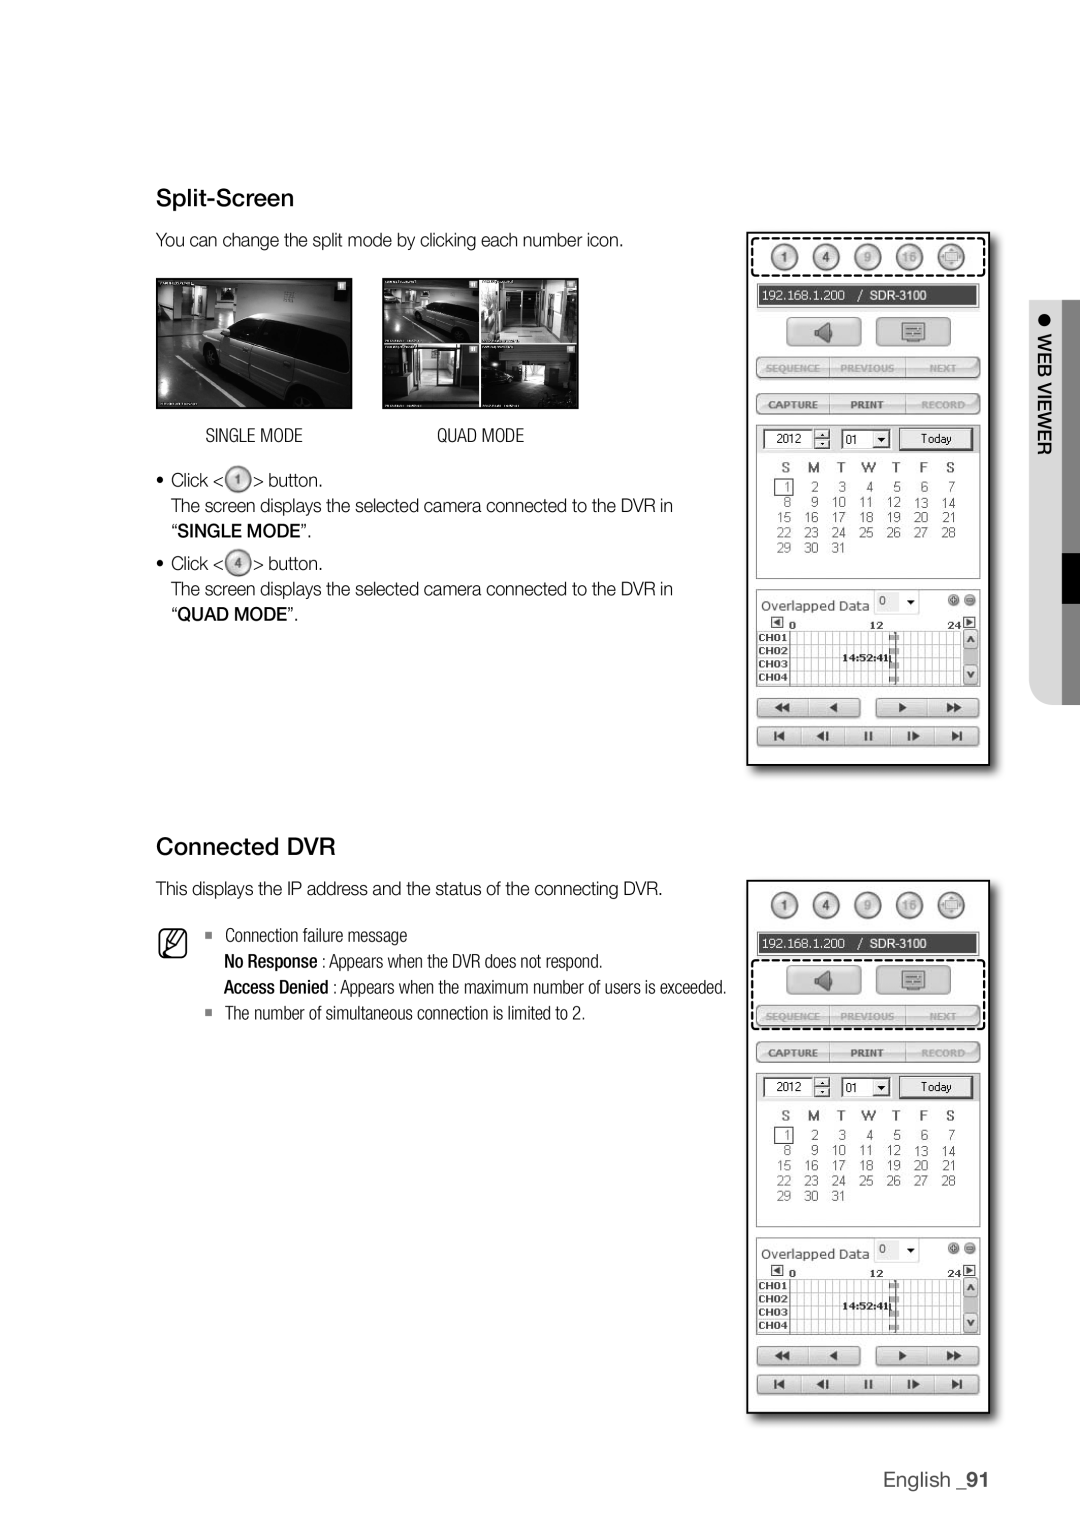 Samsung SDR3100 user manual English _91, Split-Screen, connected dVr 